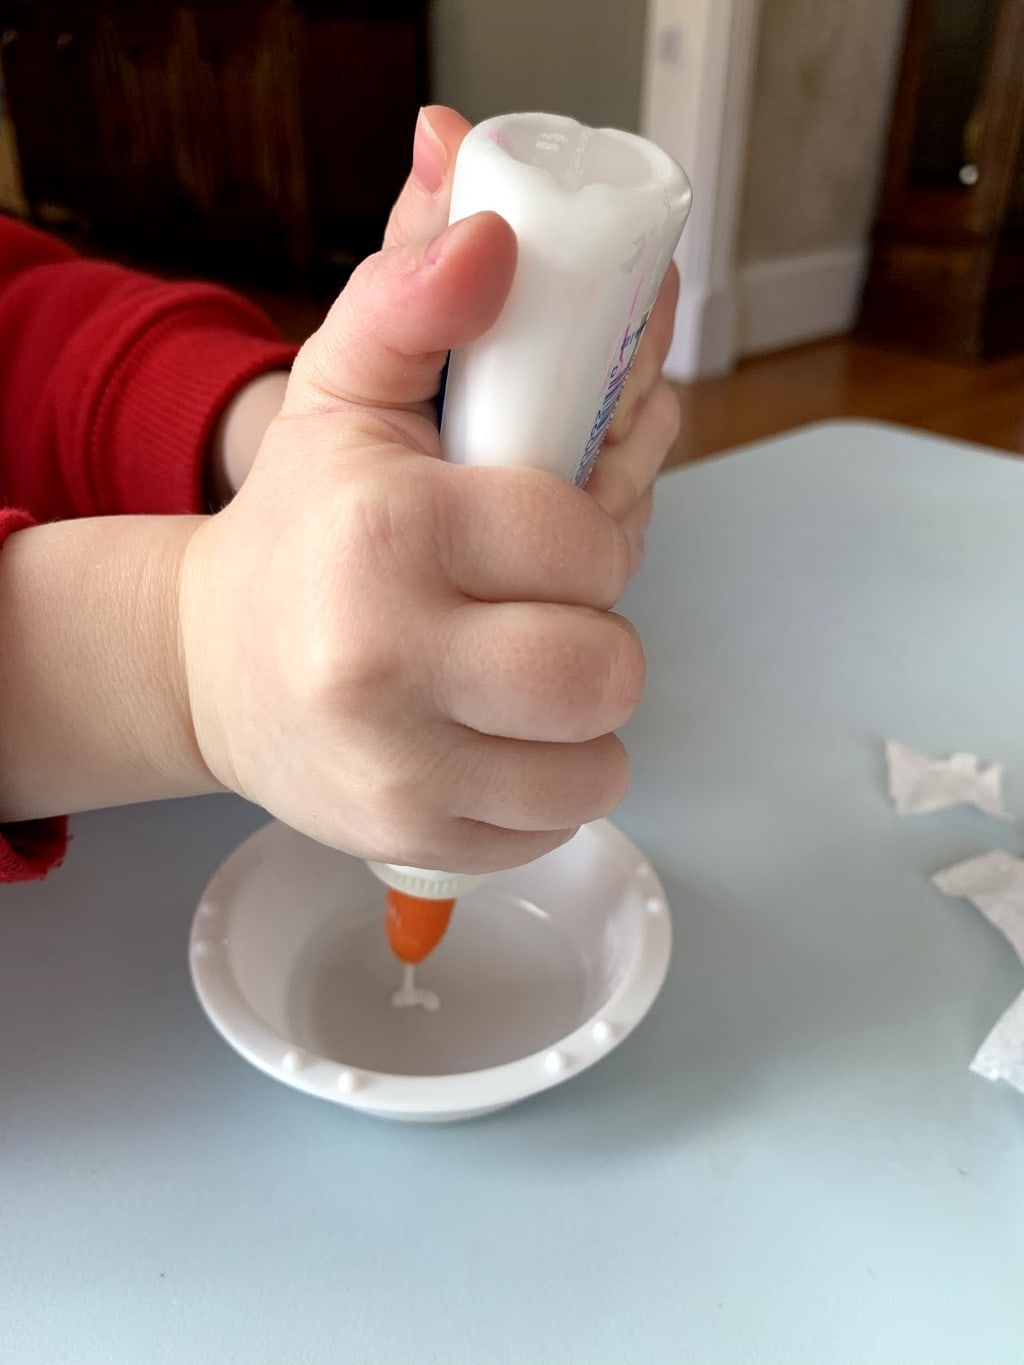 Child putting glue into a bowl